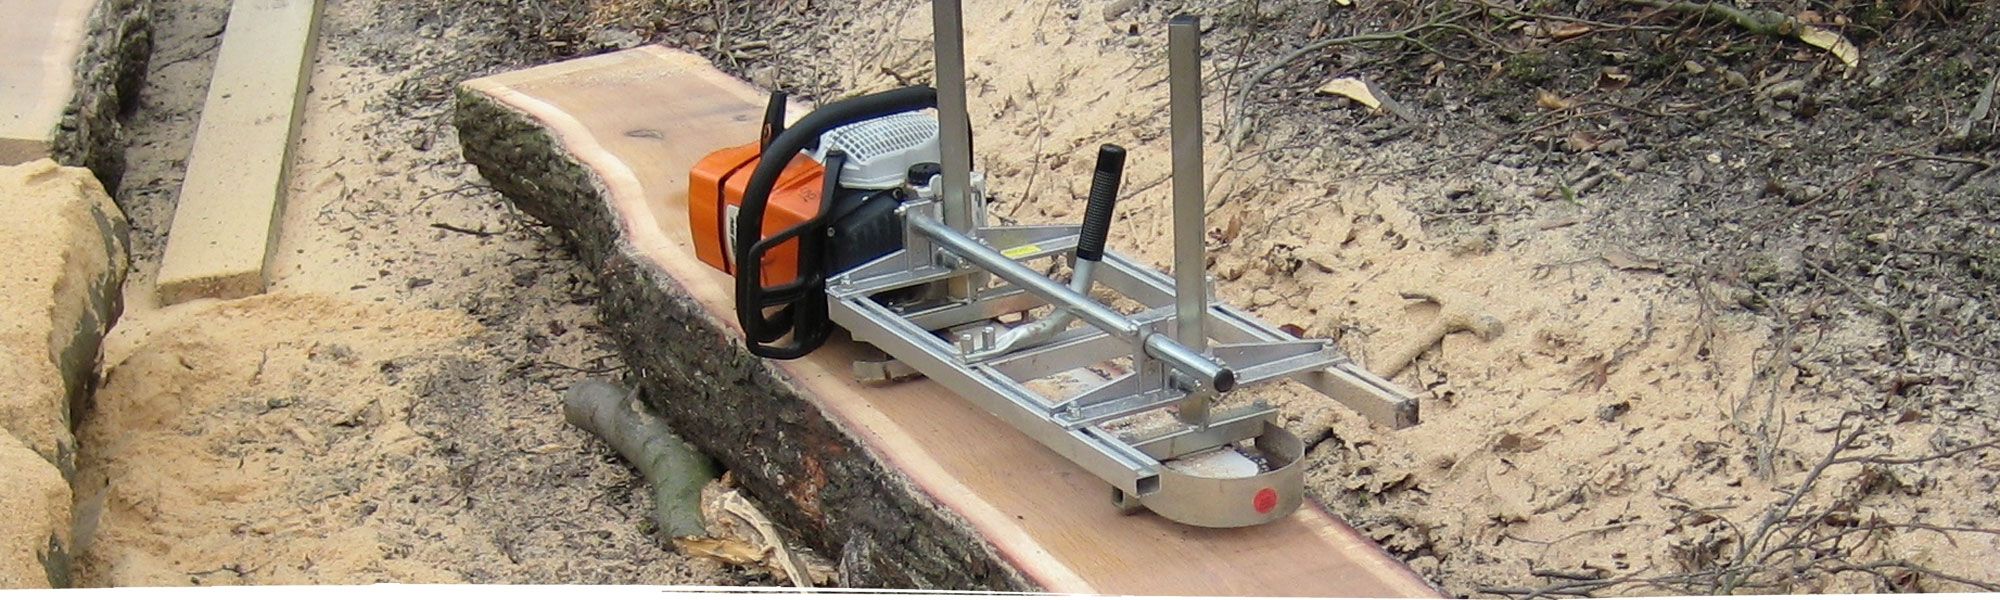 Tree felling equipment